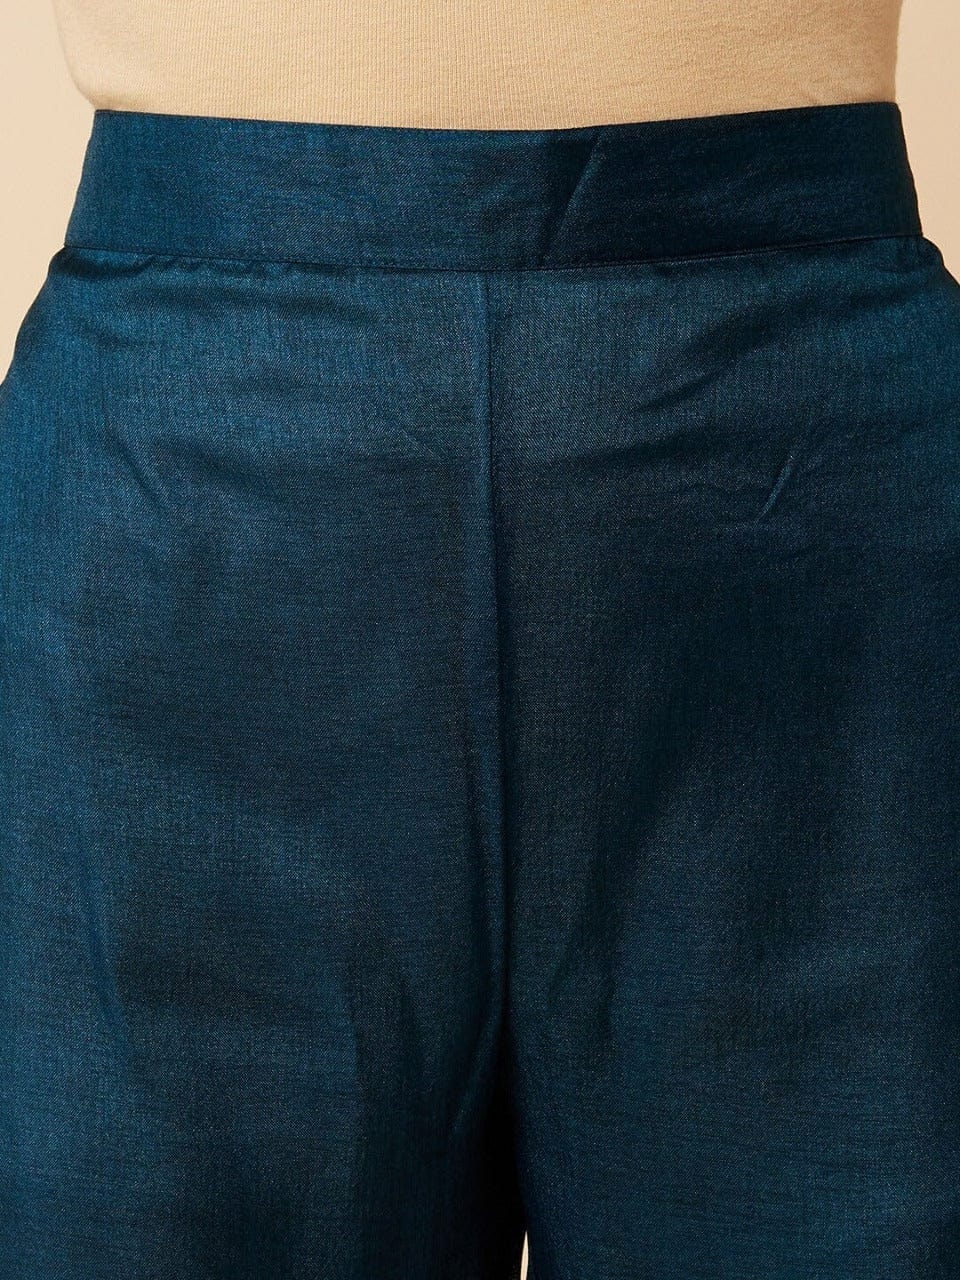 Women's Teal Yoke Design Kurti with Trousers - Varanga